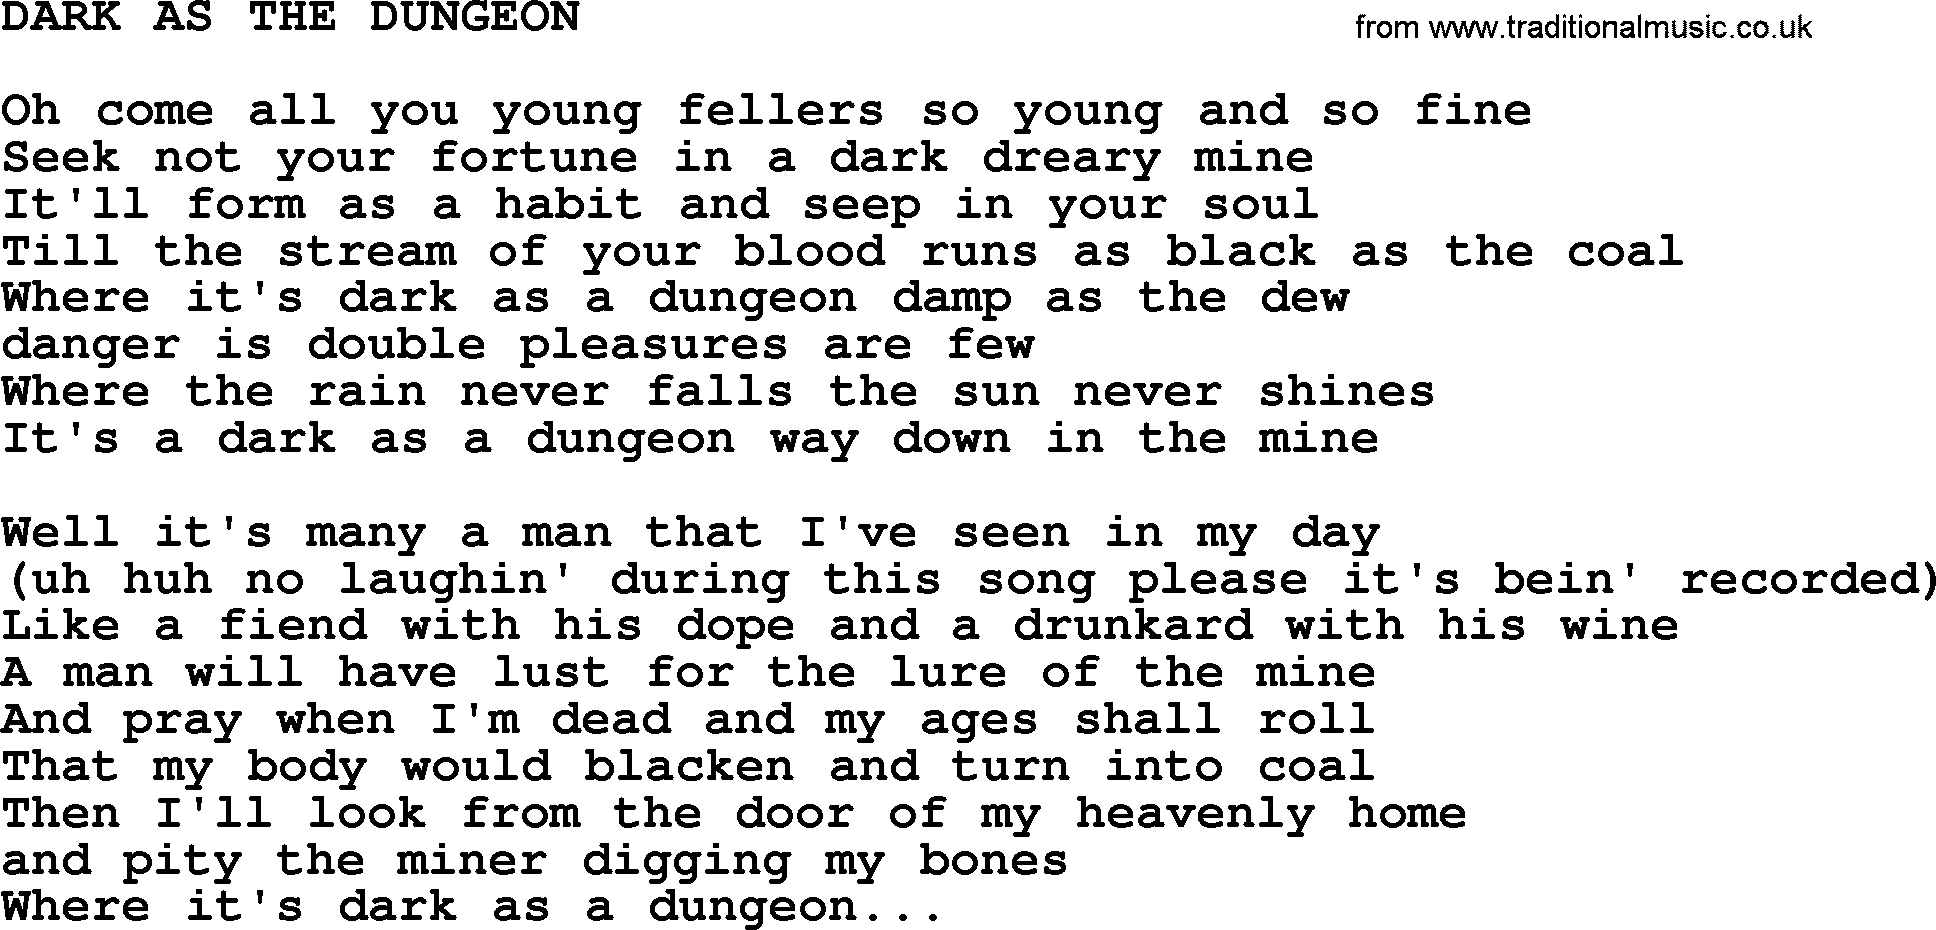 Johnny Cash song Dark As The Dungeon.txt lyrics